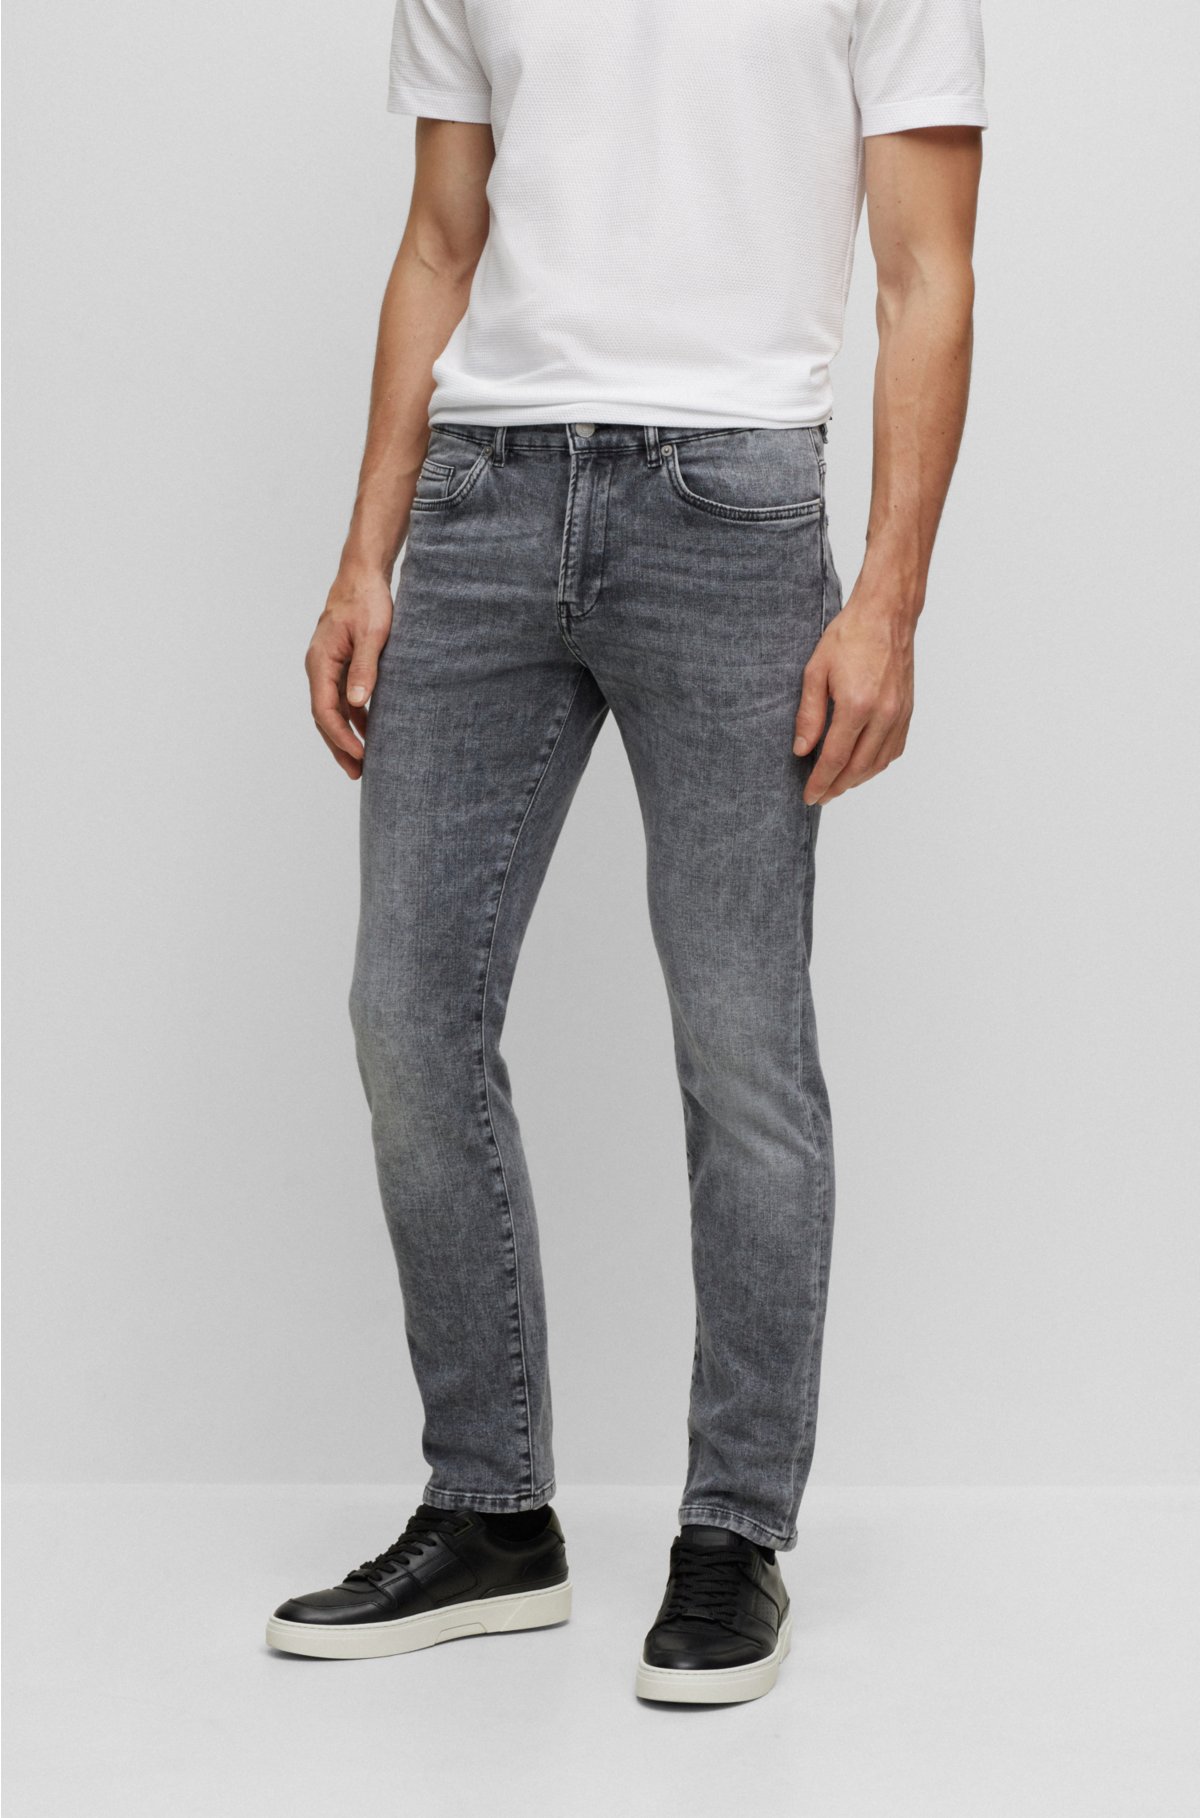 BOSS - Slim-fit jeans in stonewashed grey Italian stretch denim